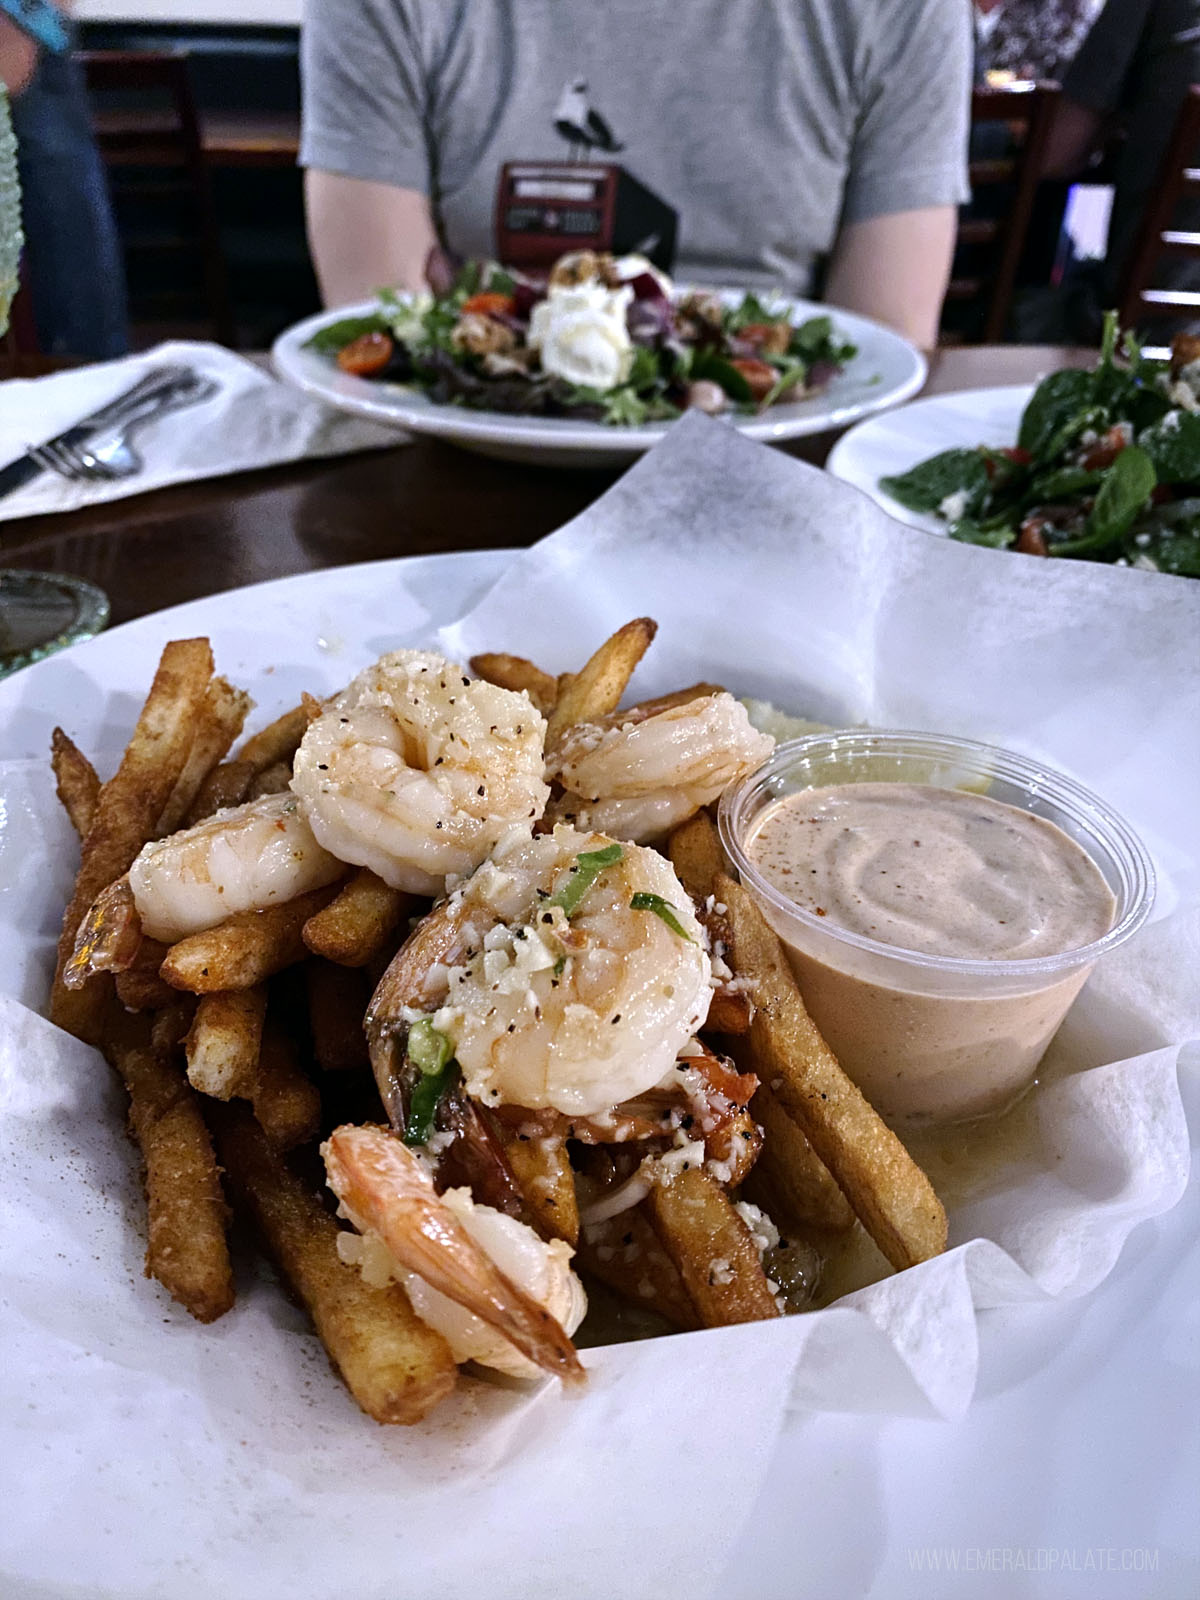 garlic shrimp over fries, a Hawaiian food classic